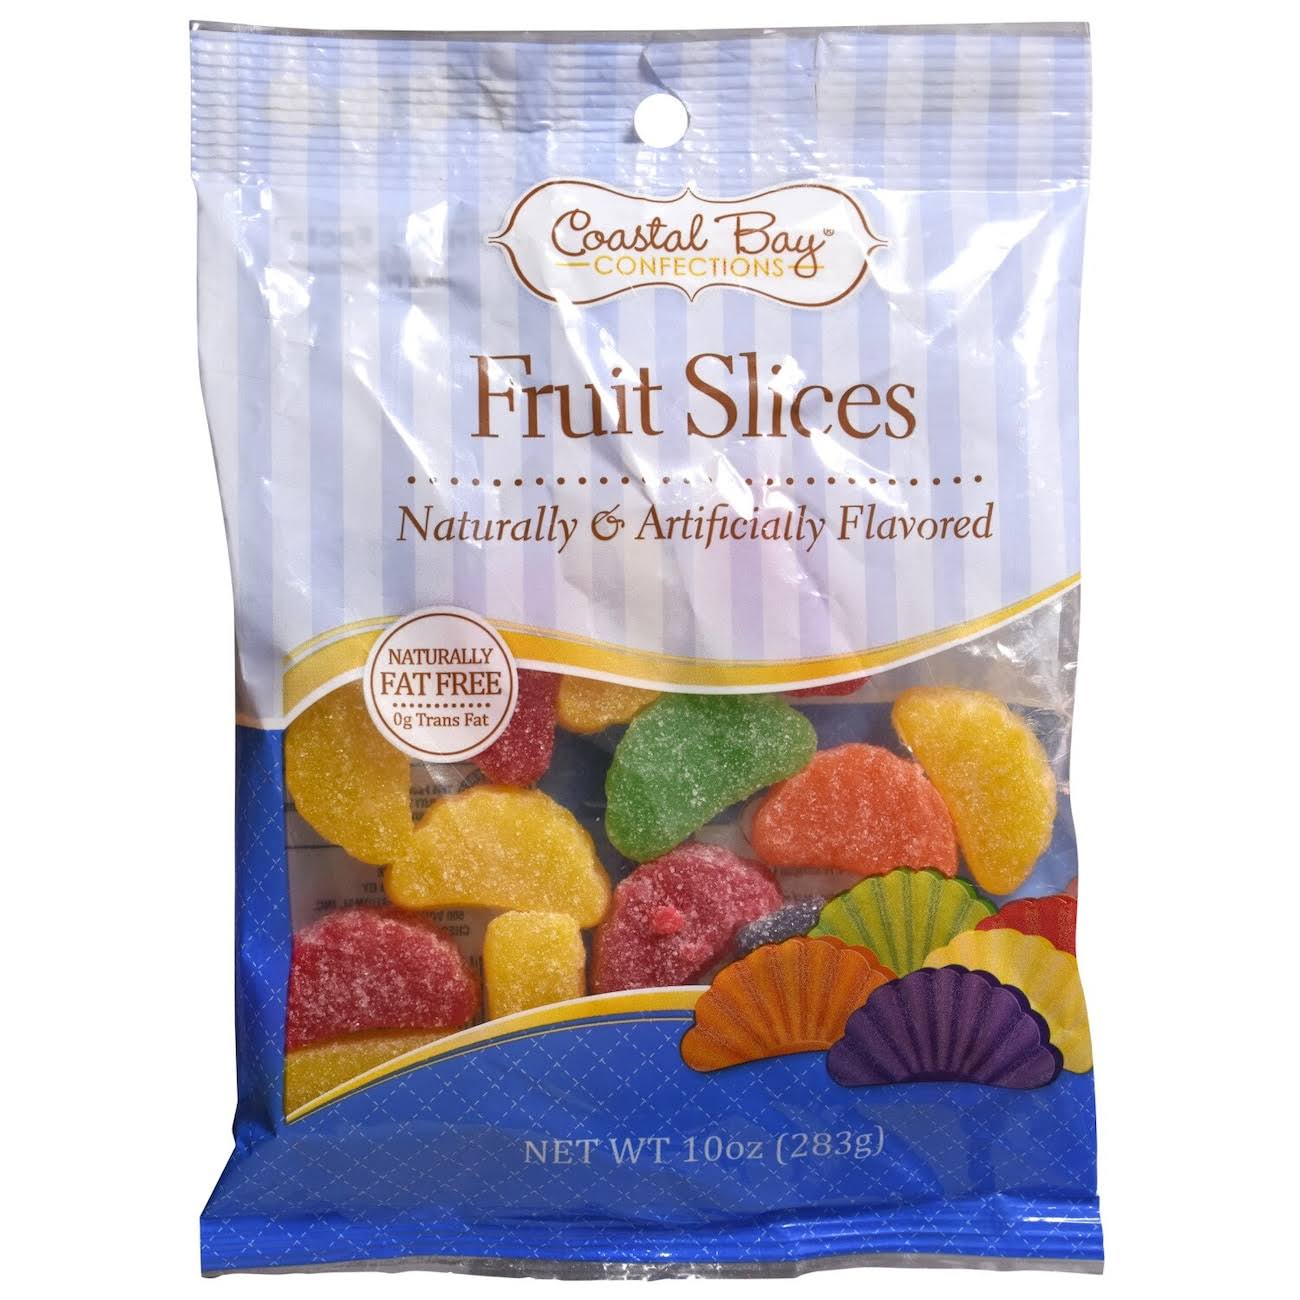 Coastal Bay Confections Fruit Slices Candy - 10.00 oz